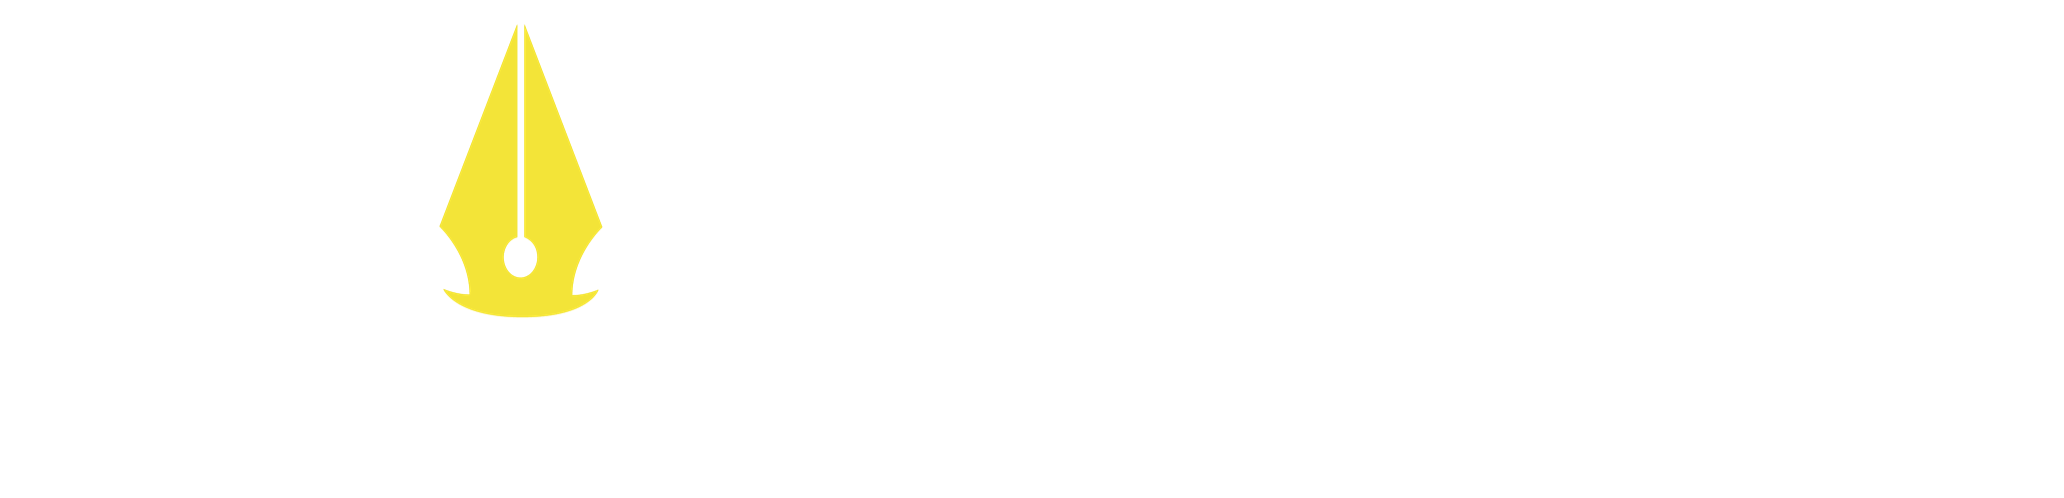 Black Pen Recruitment Logo